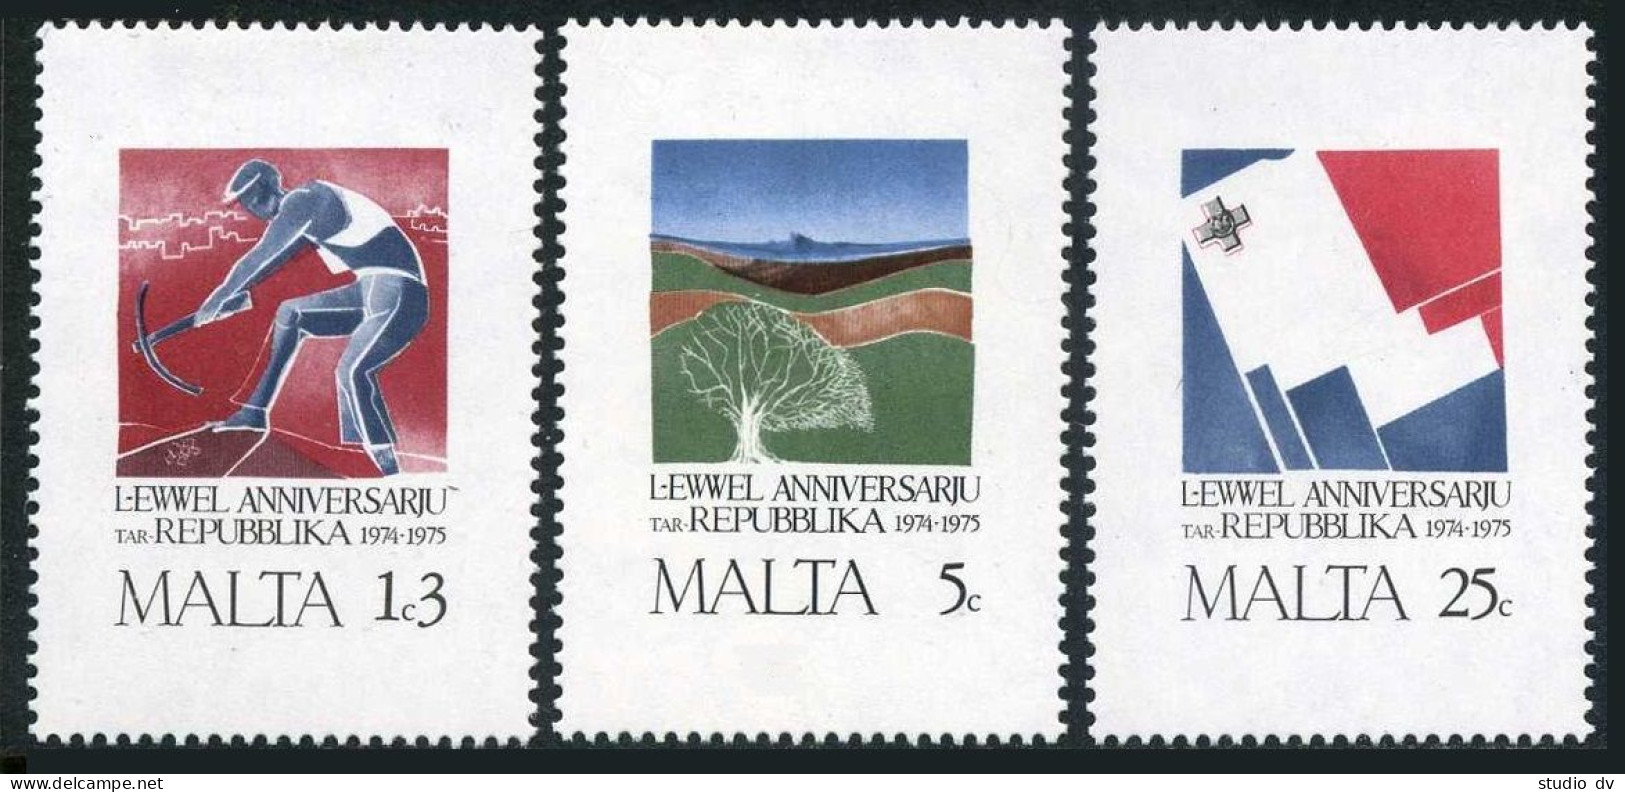 Malta 501-503, MNH. Mi 521-523. Malta Republic-1st Ann.1975. Environment, Flags. - Malta